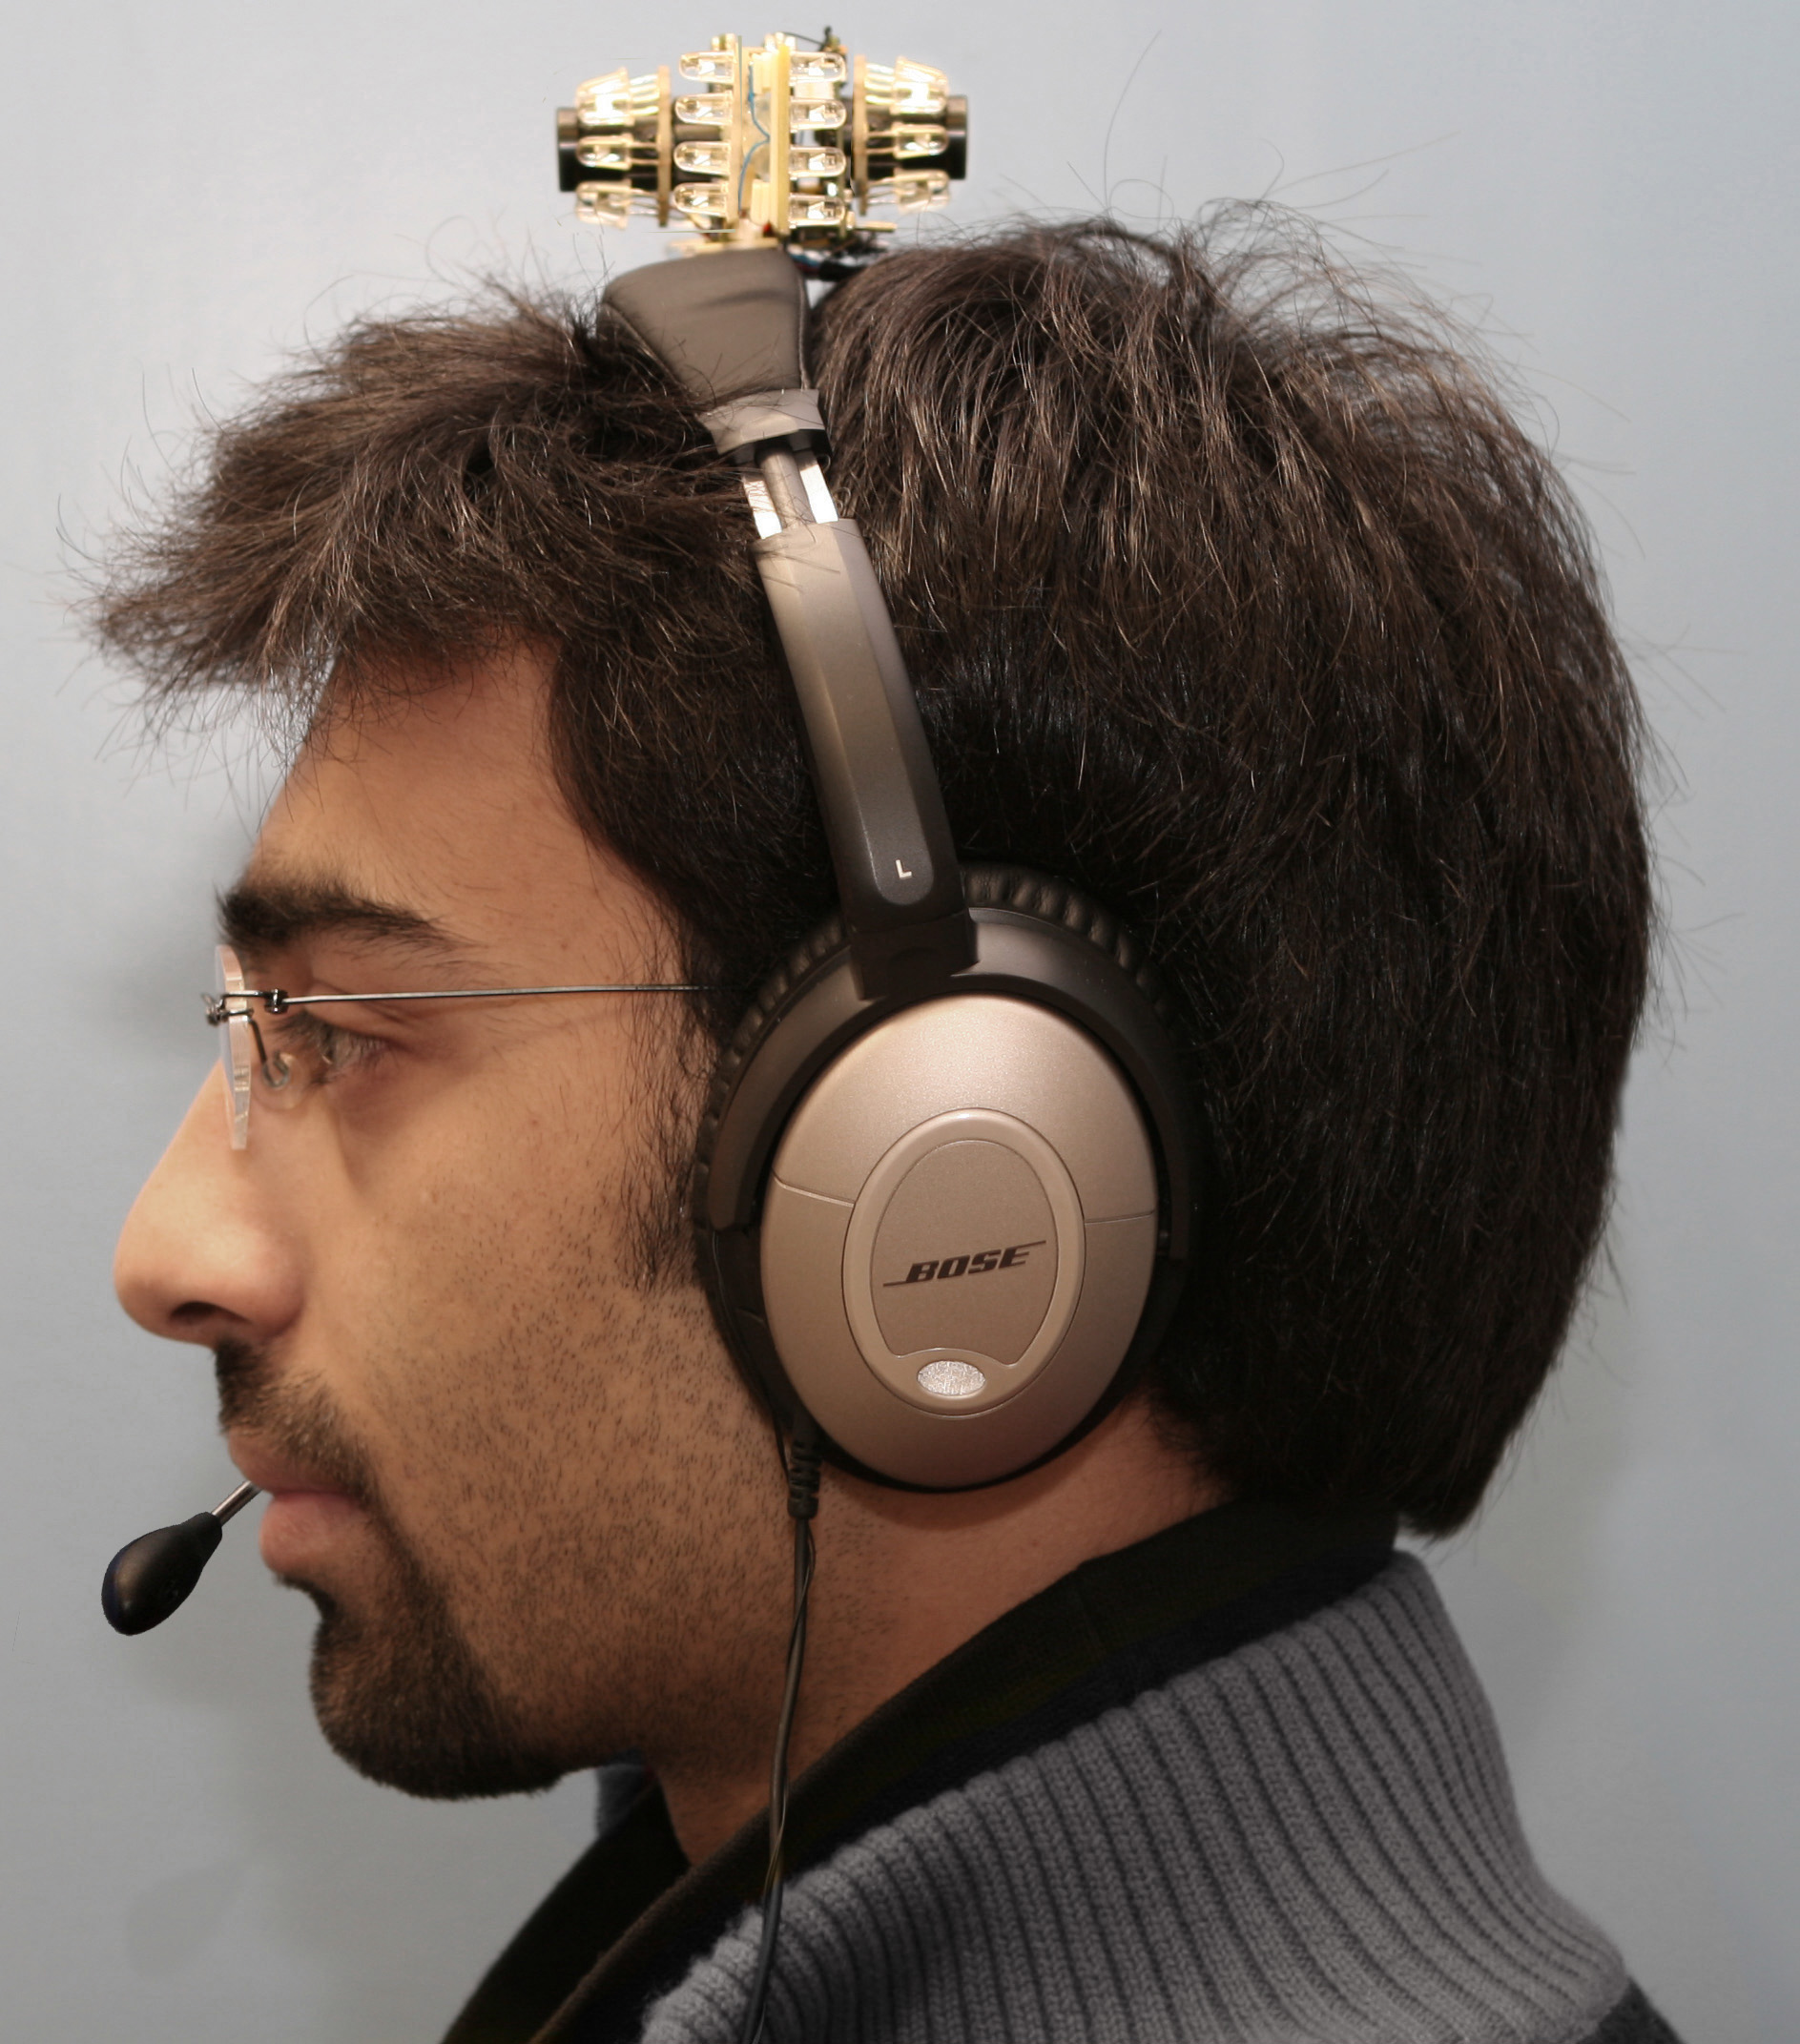 attentive headphones (2004) convey external sound upon eye contact